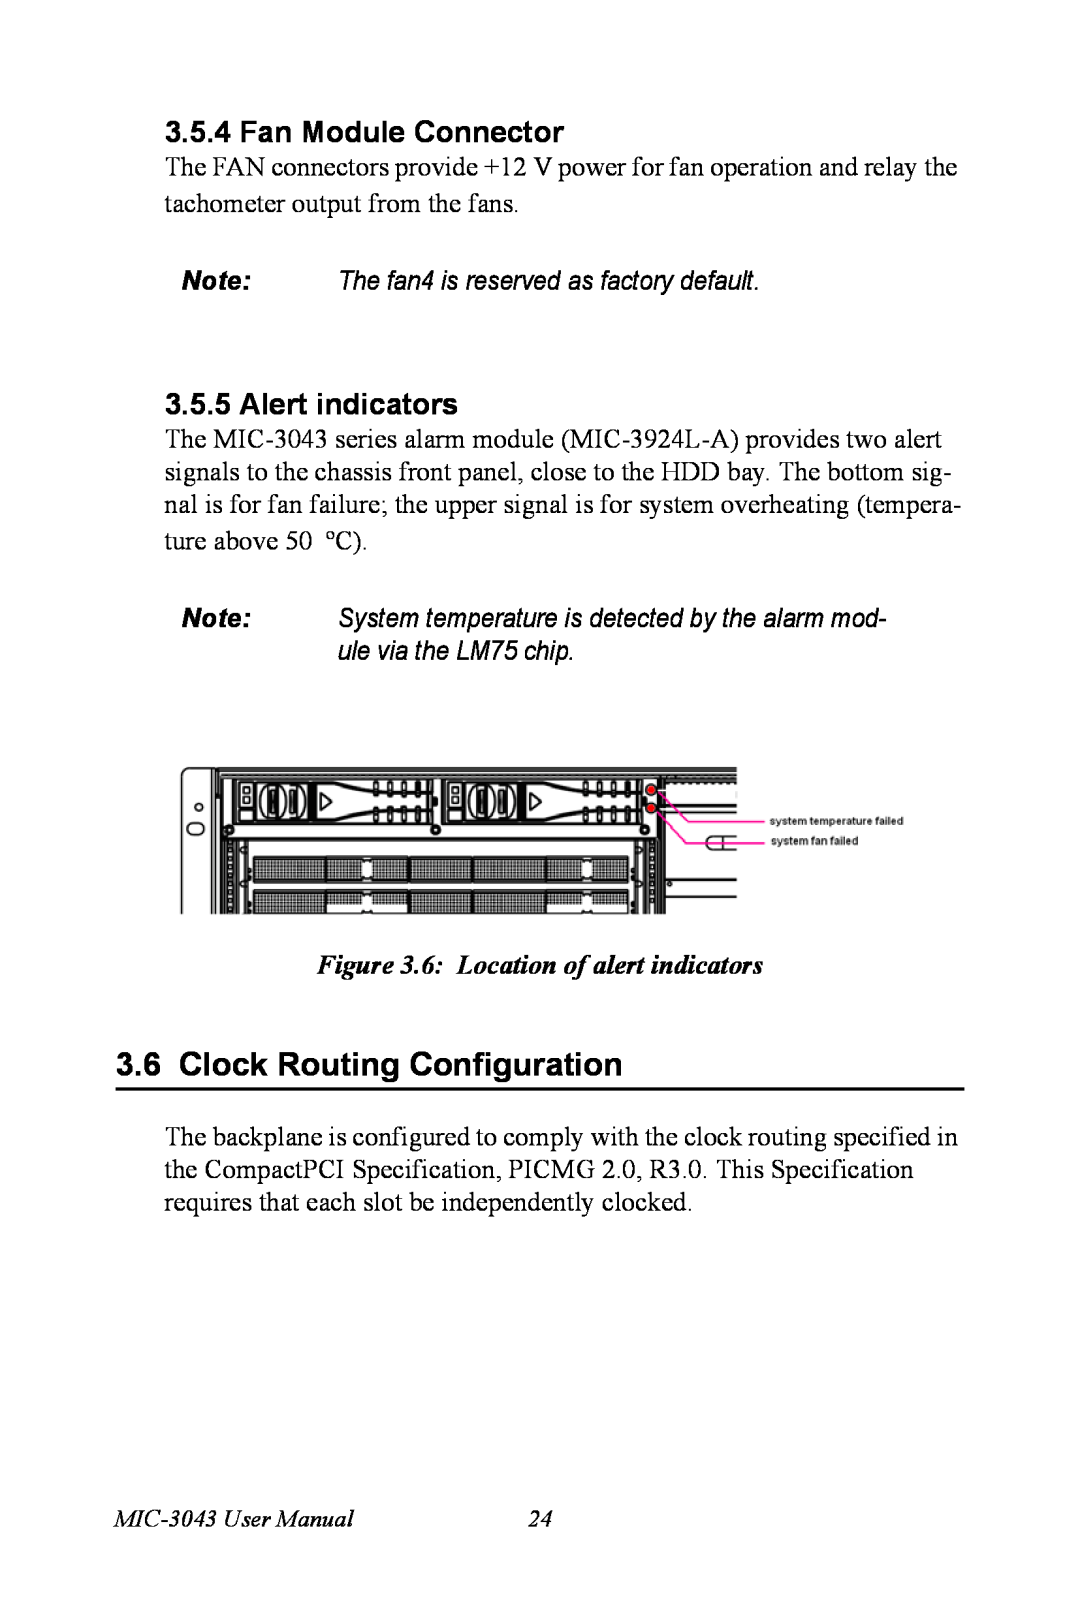 Advantech MIC-3043 Clock Routing Configuration, Fan Module Connector, Alert indicators, 6 Location of alert indicators 